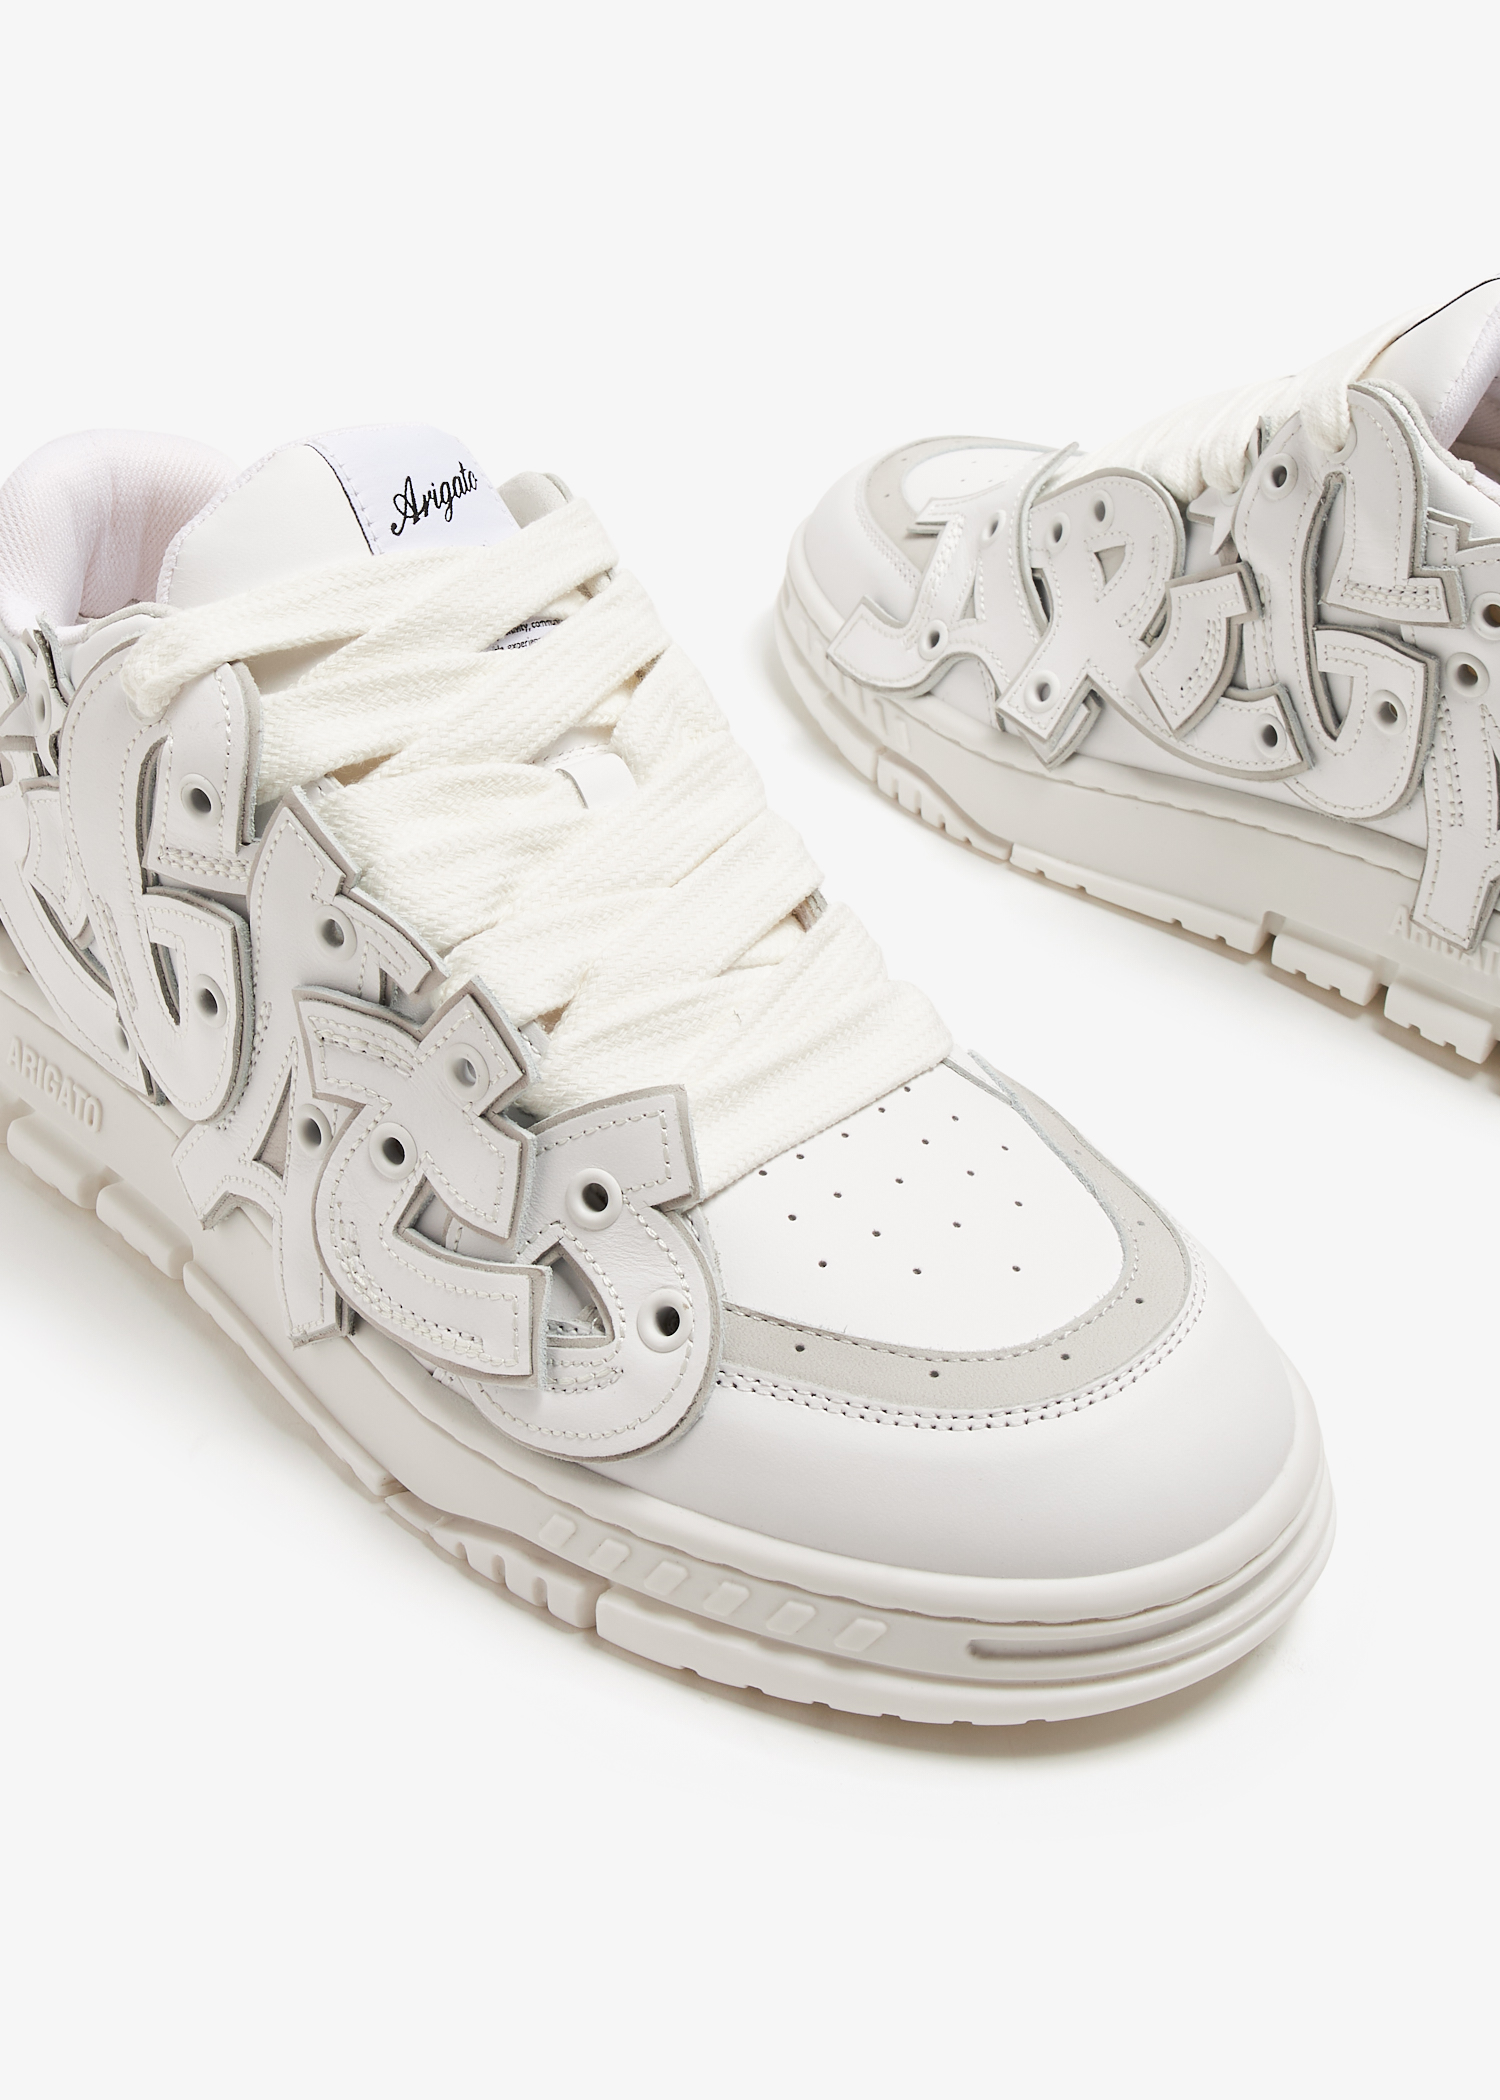 Axel Arigato Area Typo sneakers for Men - White in KSA | Level Shoes